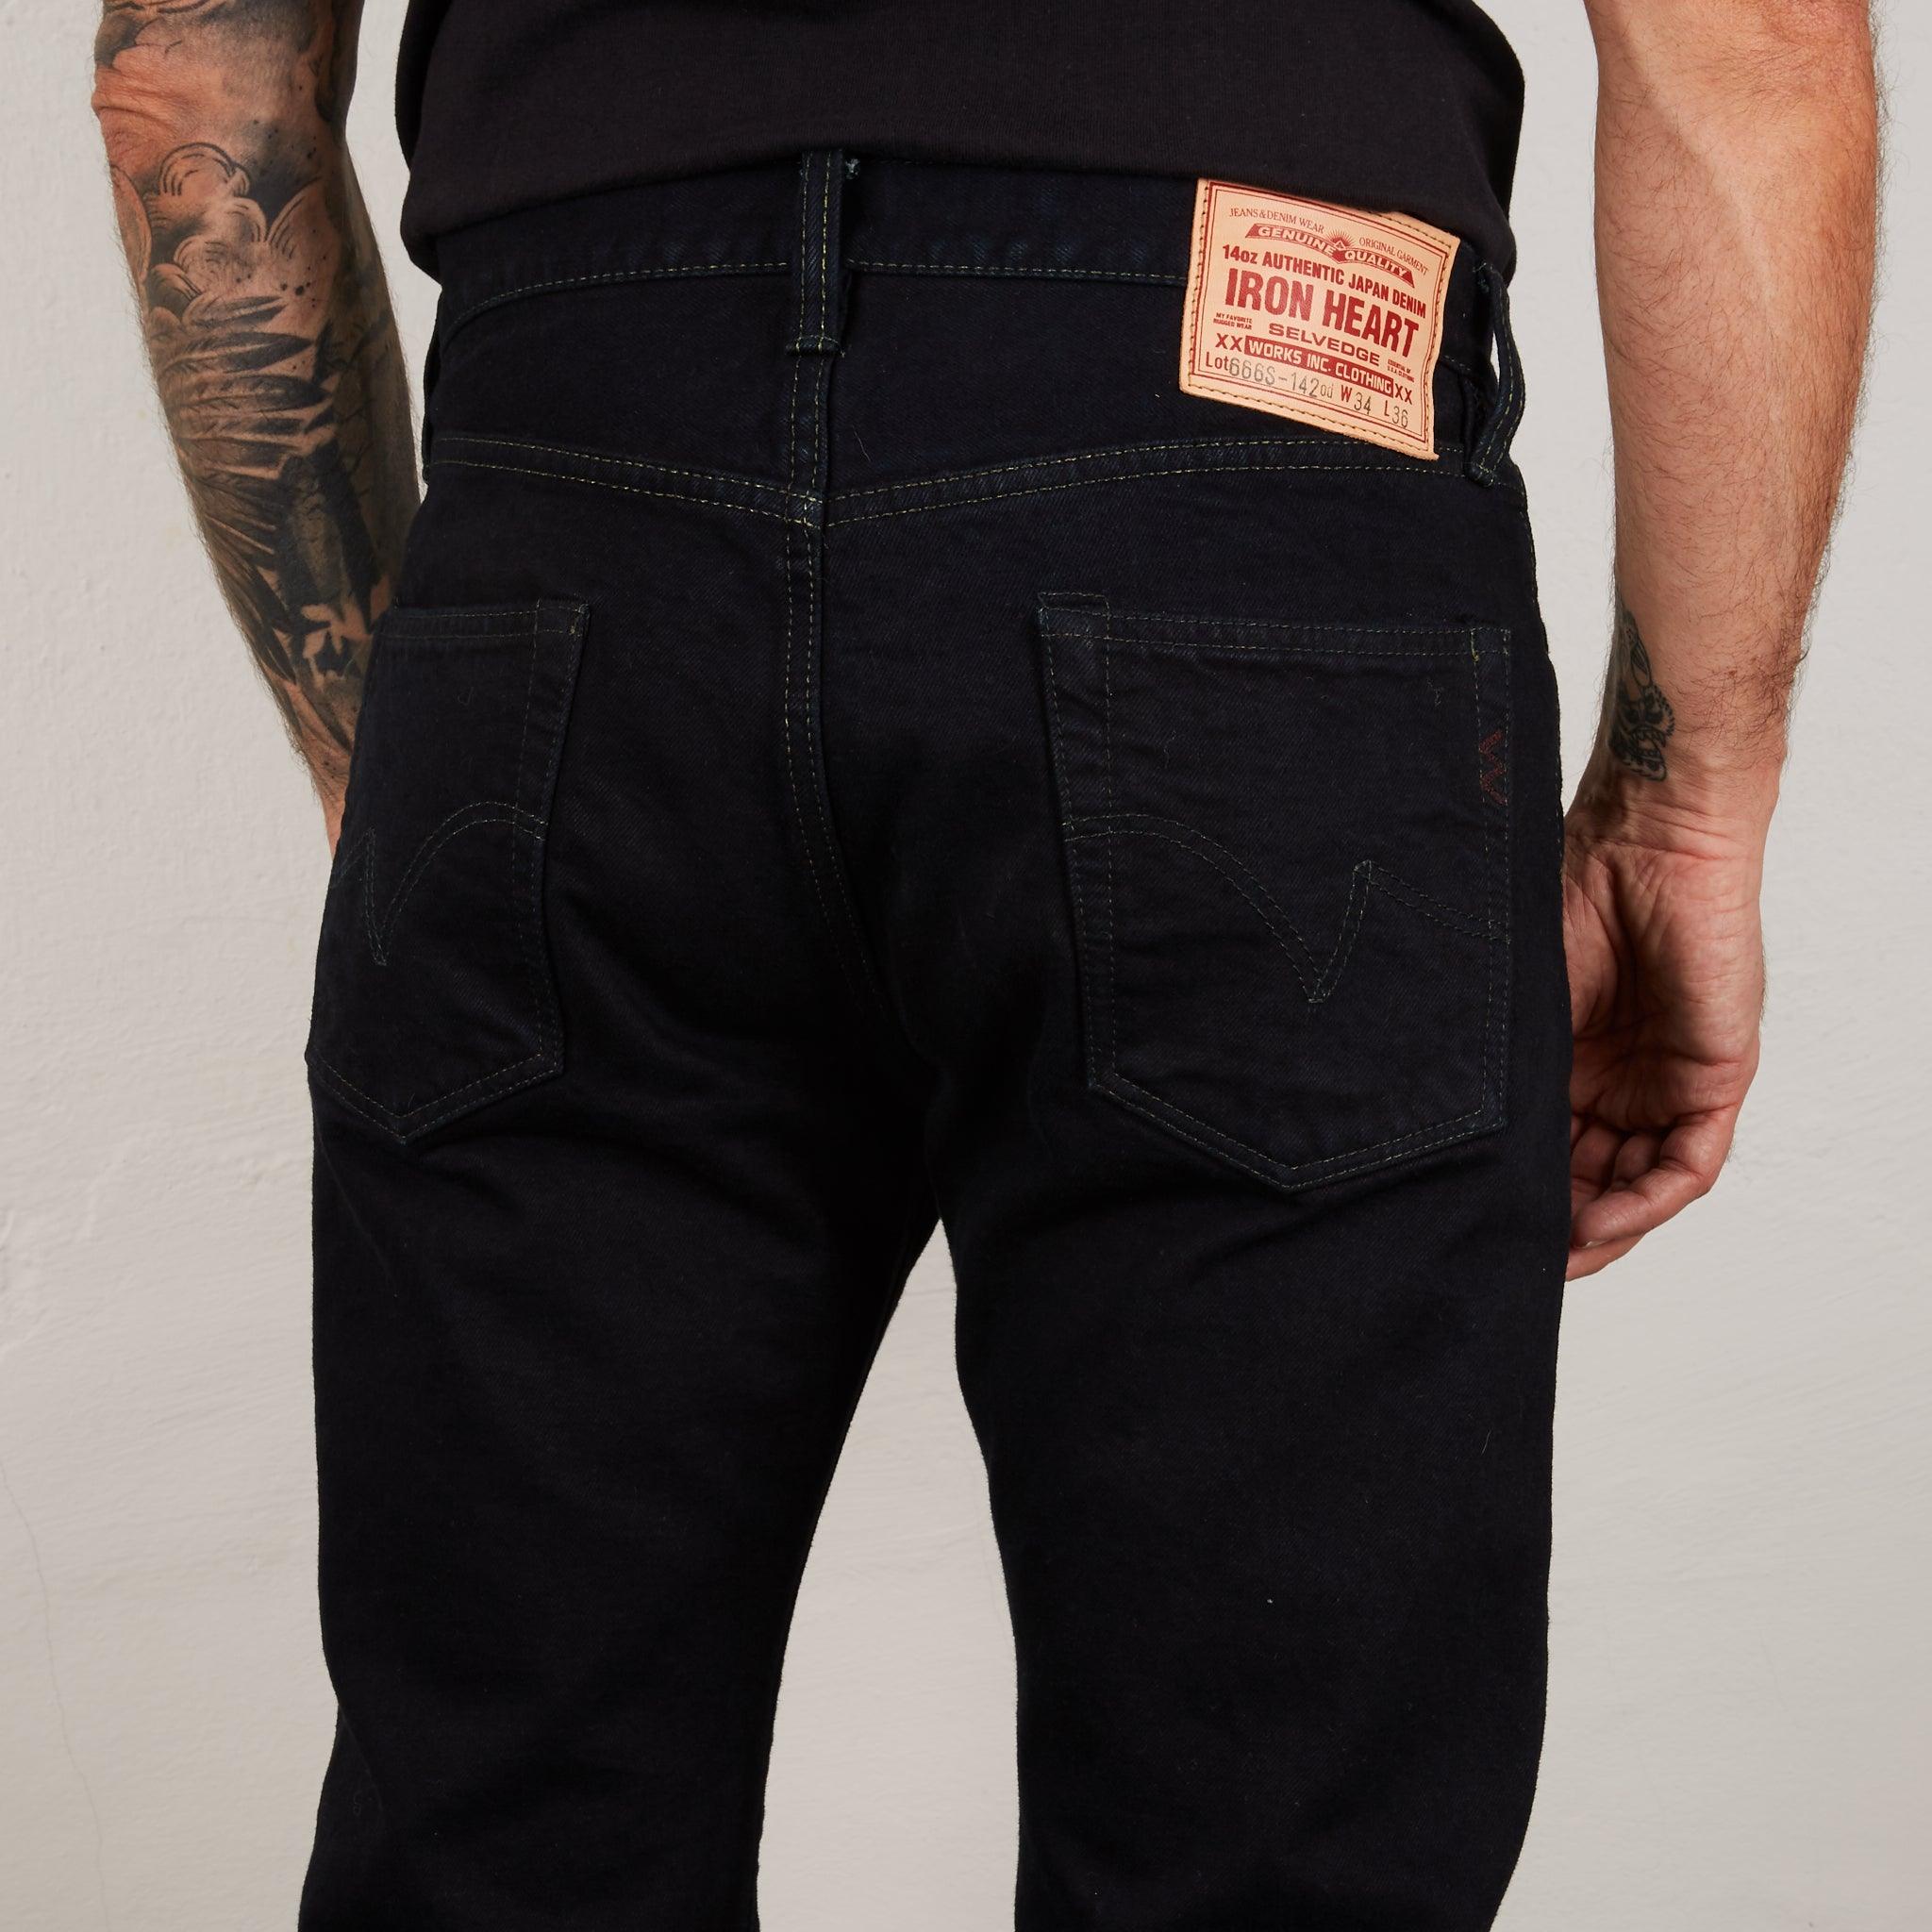 IH-666S-142od - 14oz Selvedge Denim Slim Straight Cut Jeans Indigo Overdyed Black